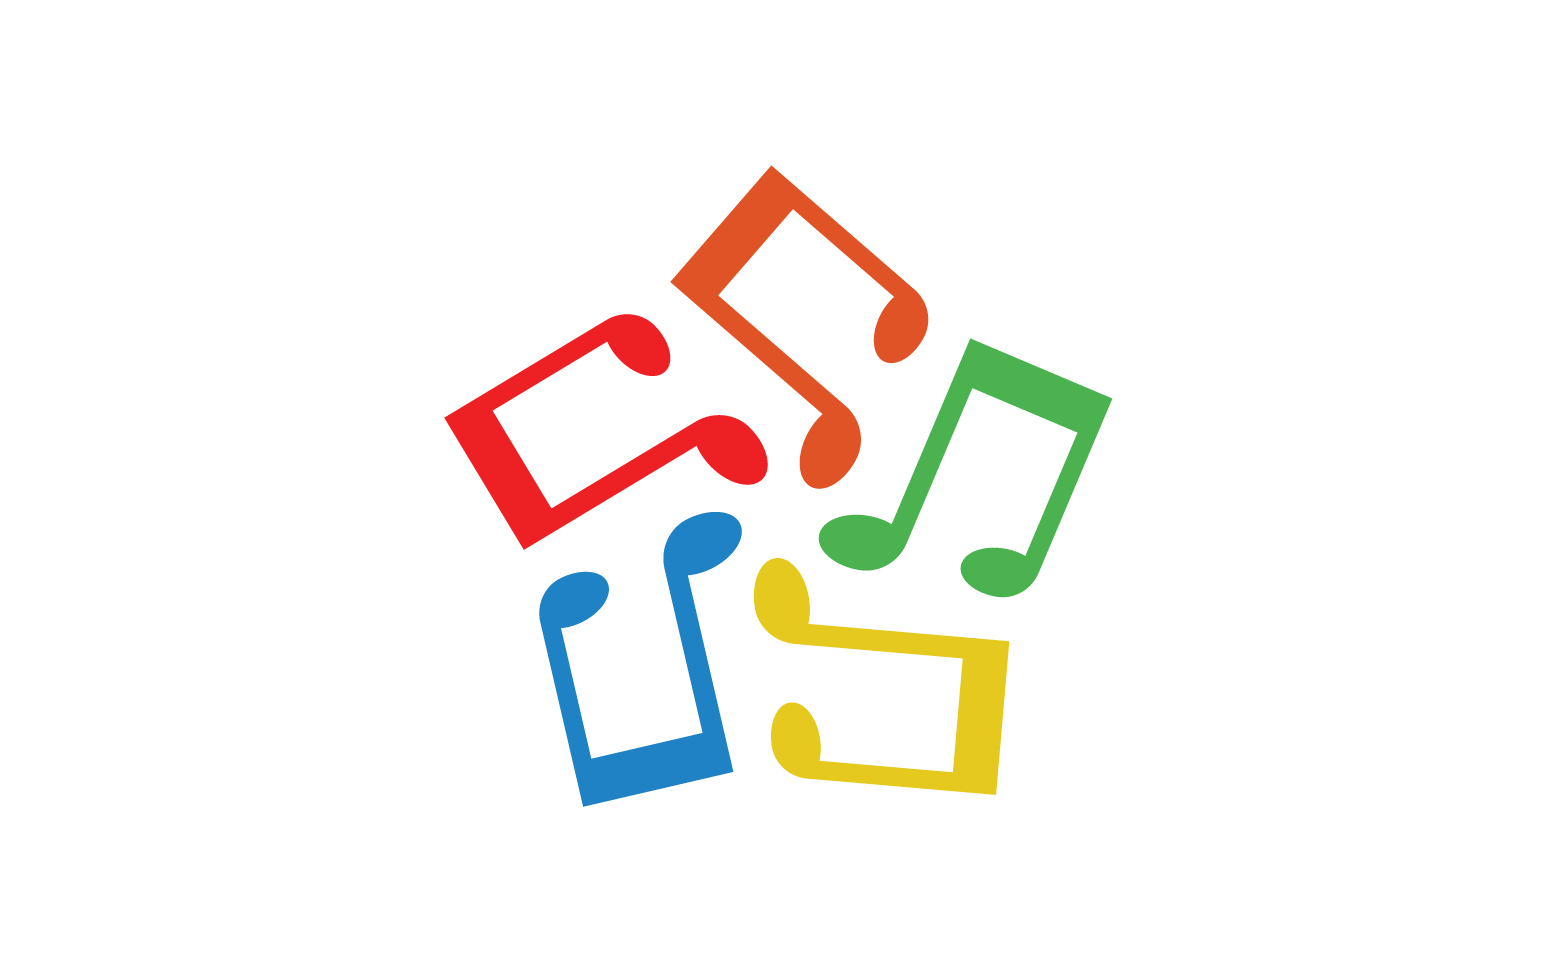 Music sound player app icon logo v11